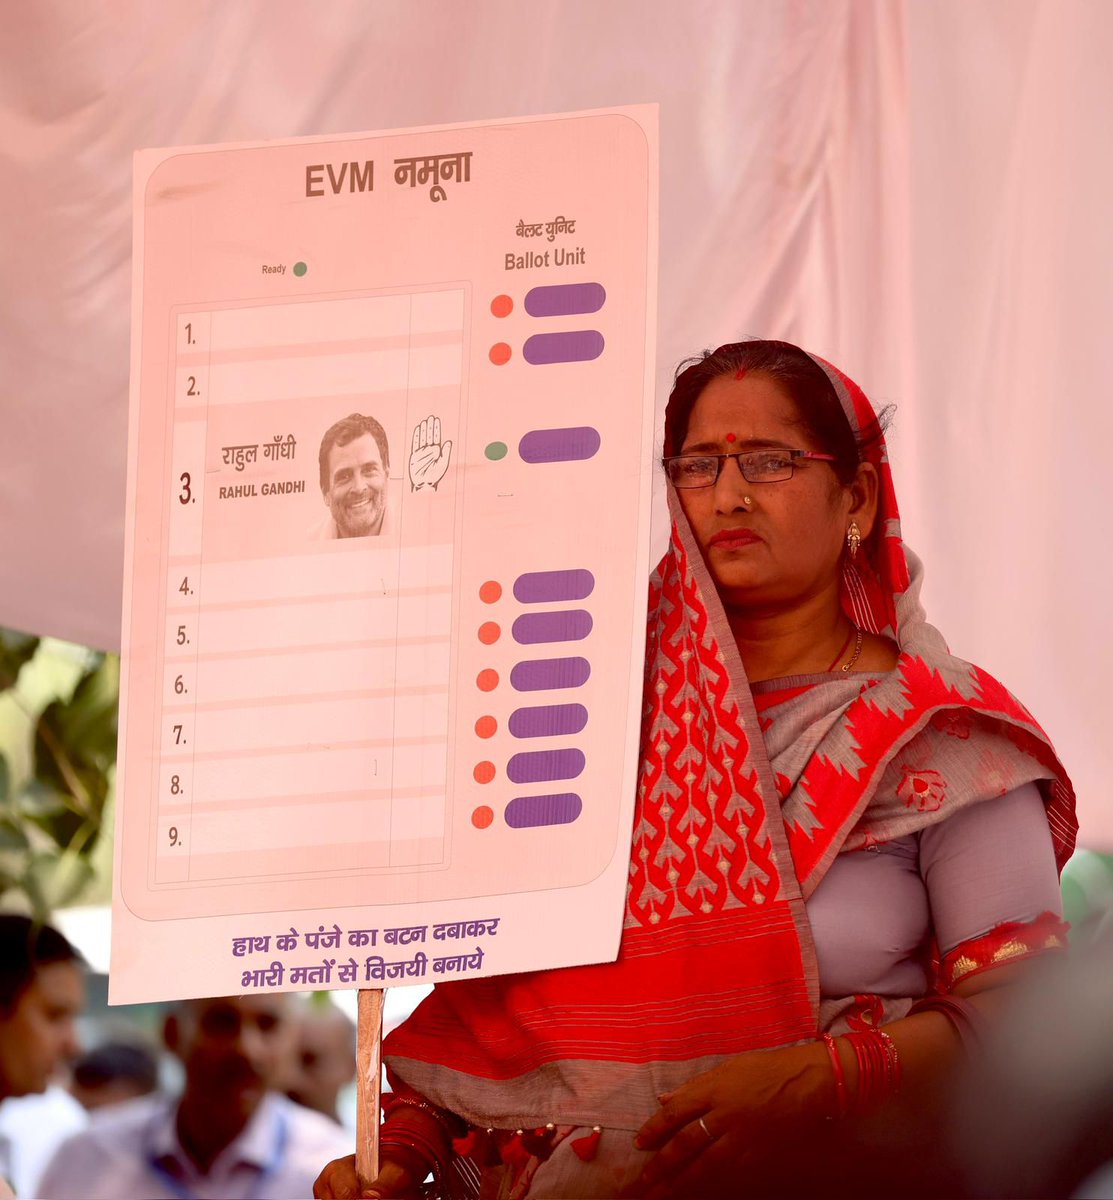 Raebareli, Uttar Pradesh.

People's Leader Shri @RahulGandhi ji's EVM Number  3 🗳️

#Vote4INDIA
#Vote4RahulGandhi